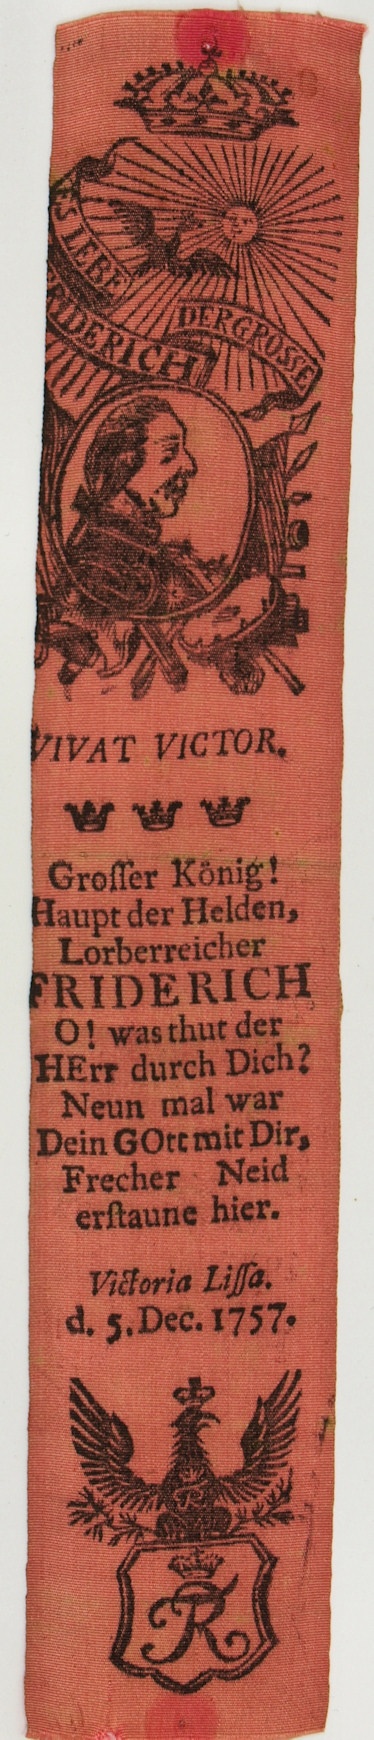 Vivatband anlässlich der Schlacht bei Lissa, Siebenjähriger Krieg 5. Dez. 1757 (Museum Weißenfels - Schloss Neu-Augustusburg CC BY-NC-SA)